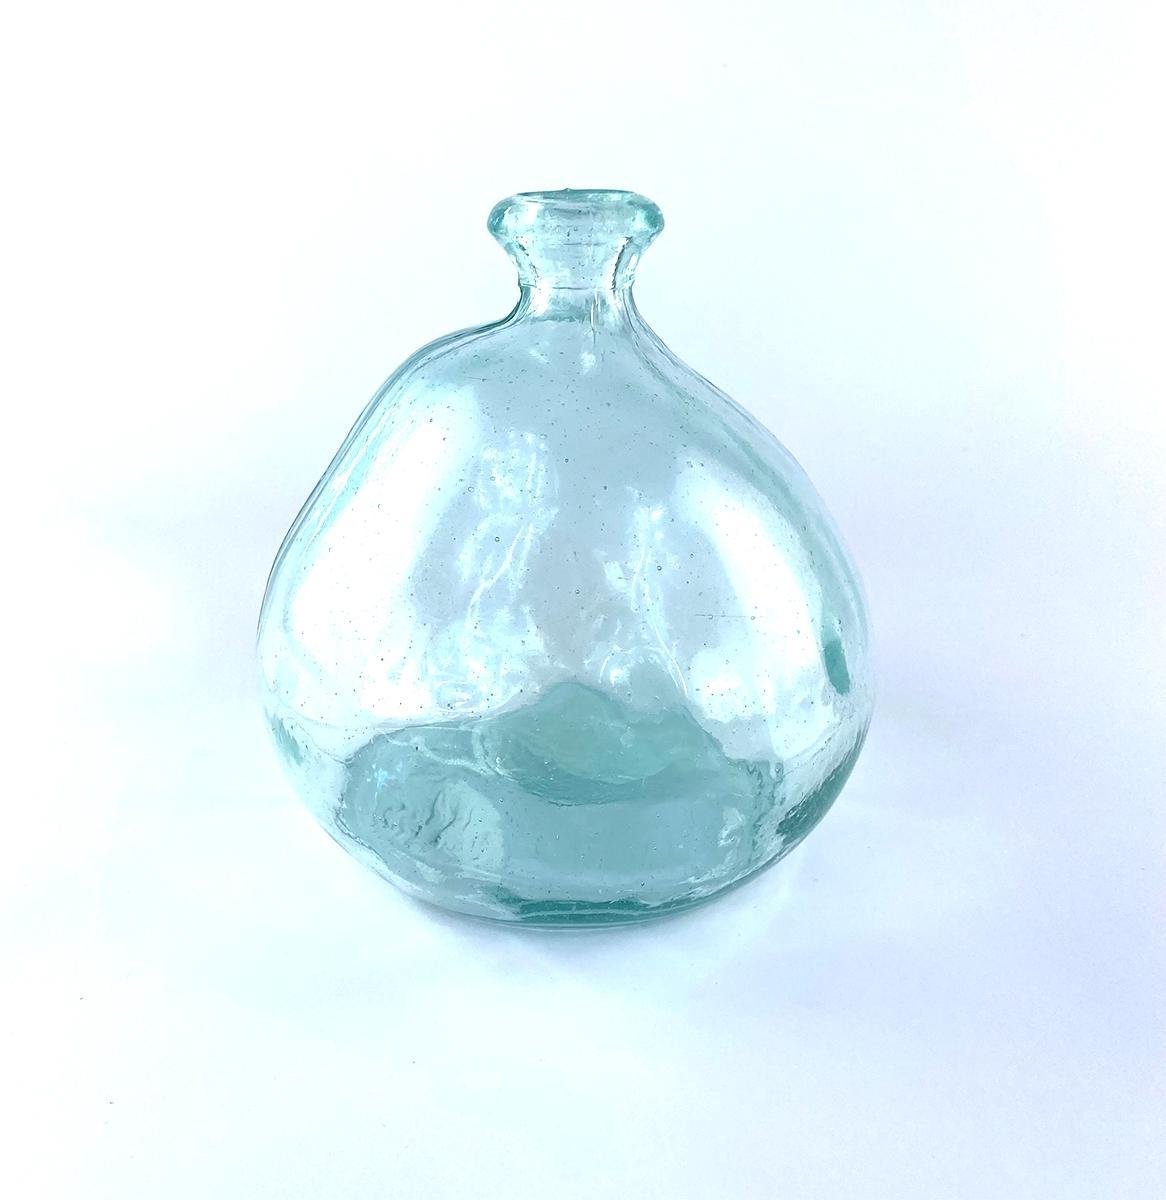 WDMT™ Bol vaas | Gerecycled glas | Blauw - groen tint | bol.com